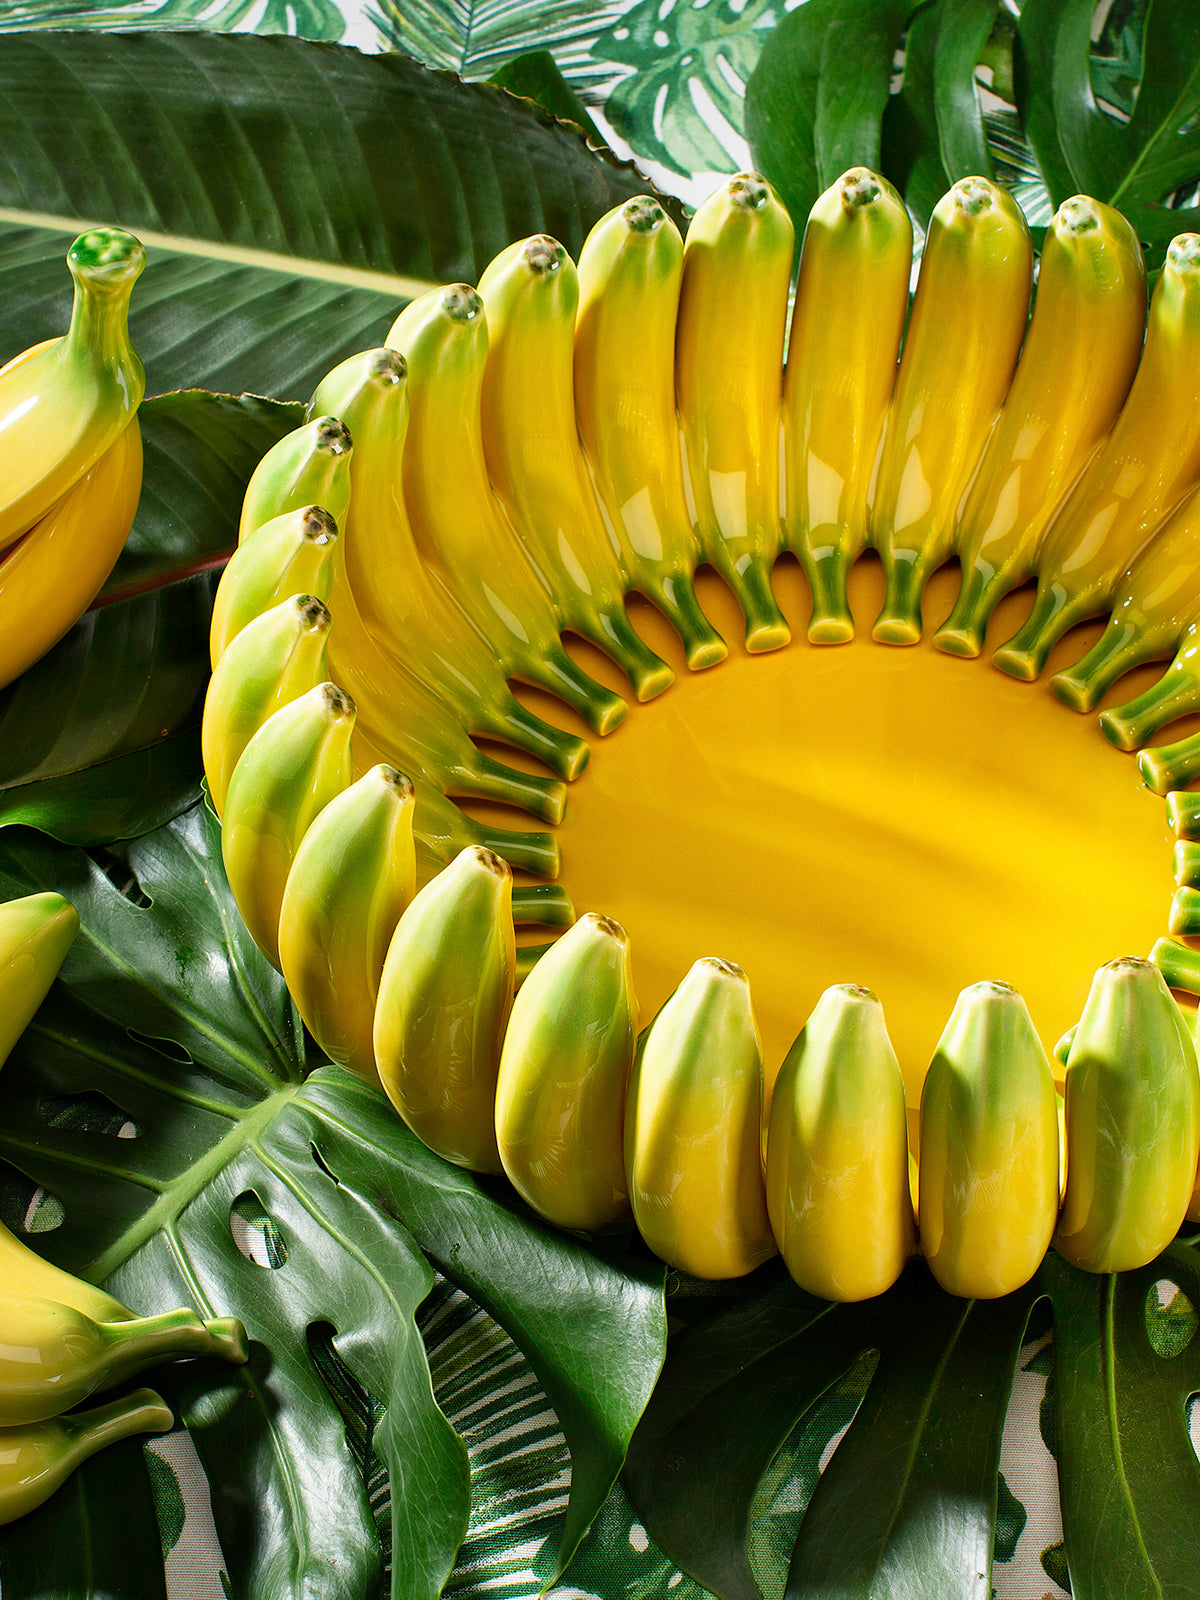 Centrepiece (38cm), yellow - Banana da Madeira